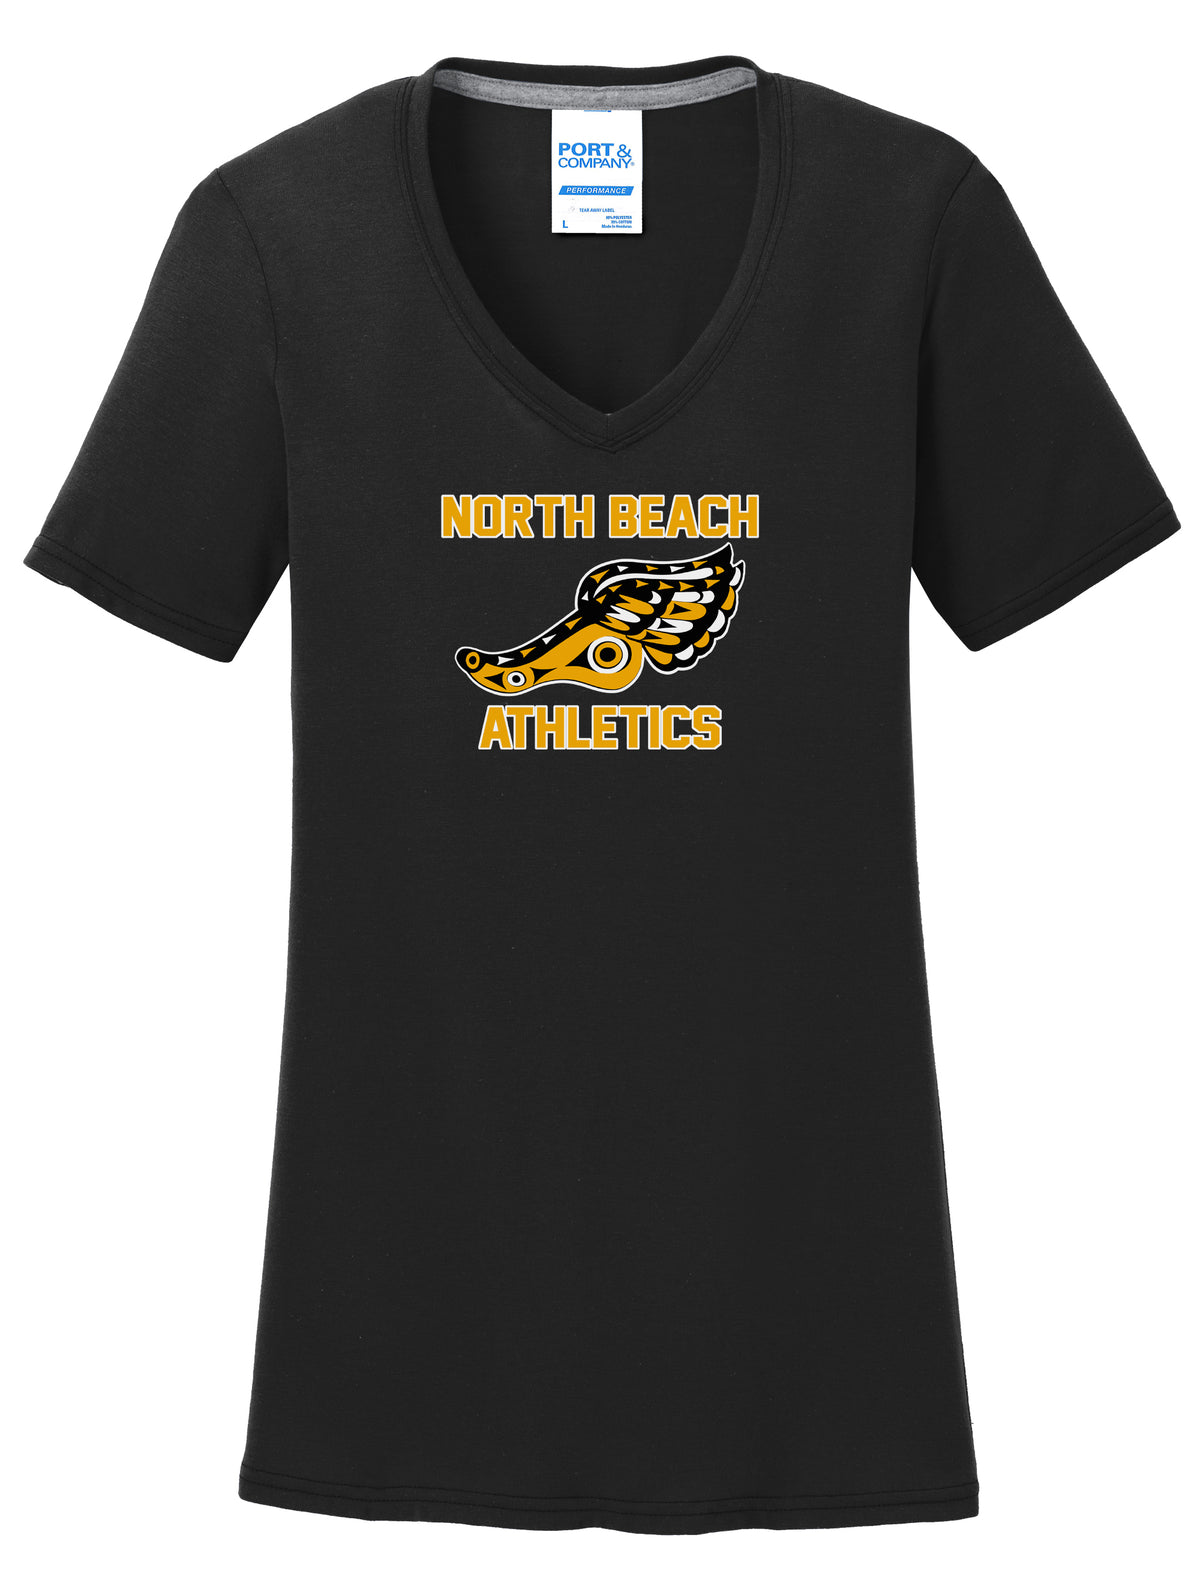 North Beach Athletics Women's T-Shirt